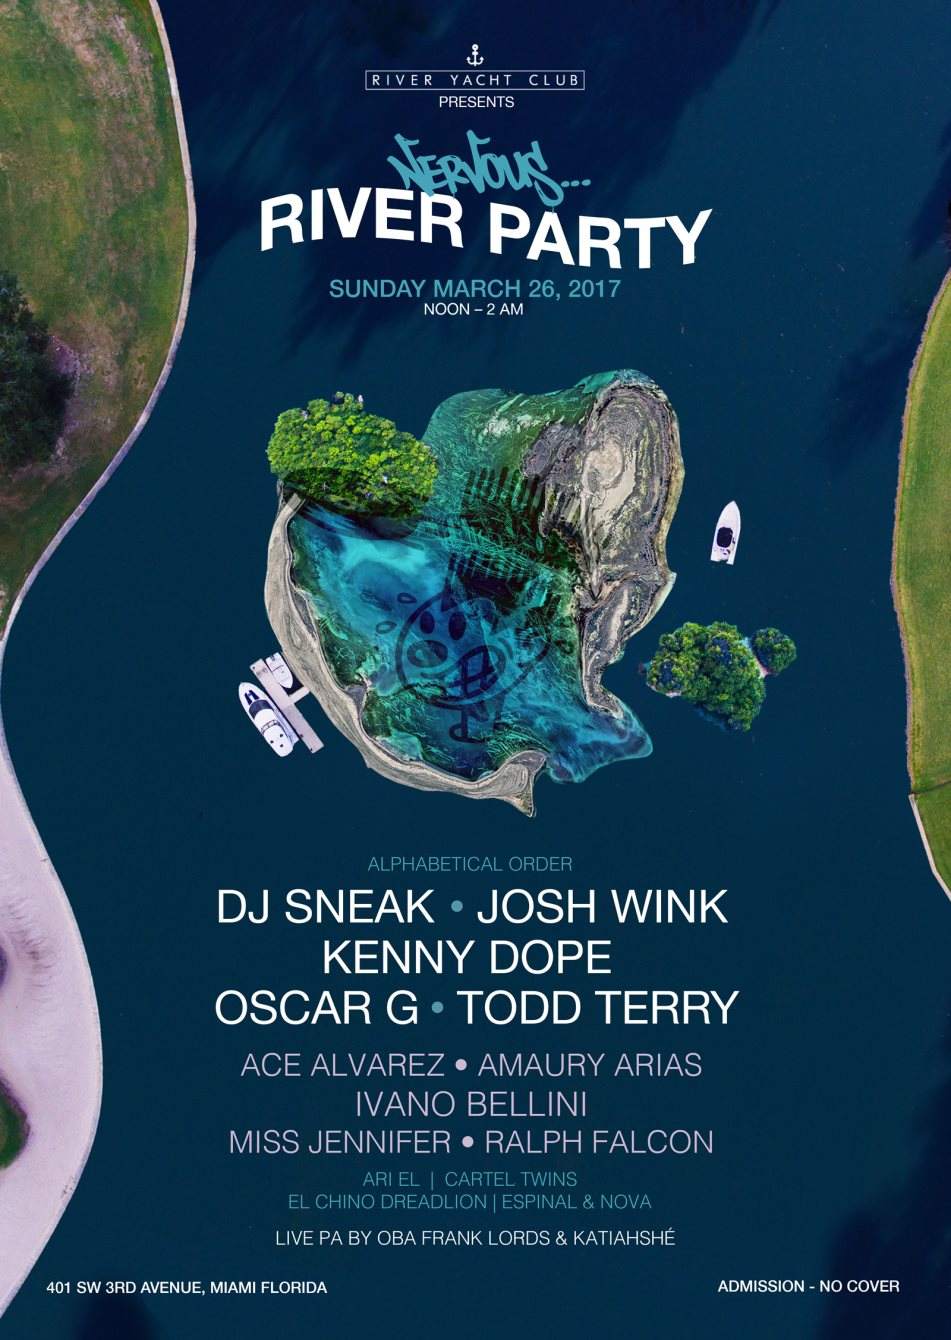 Nervous River Party with Oscar G, Kenny Dope, Josh Wink & More - Página frontal